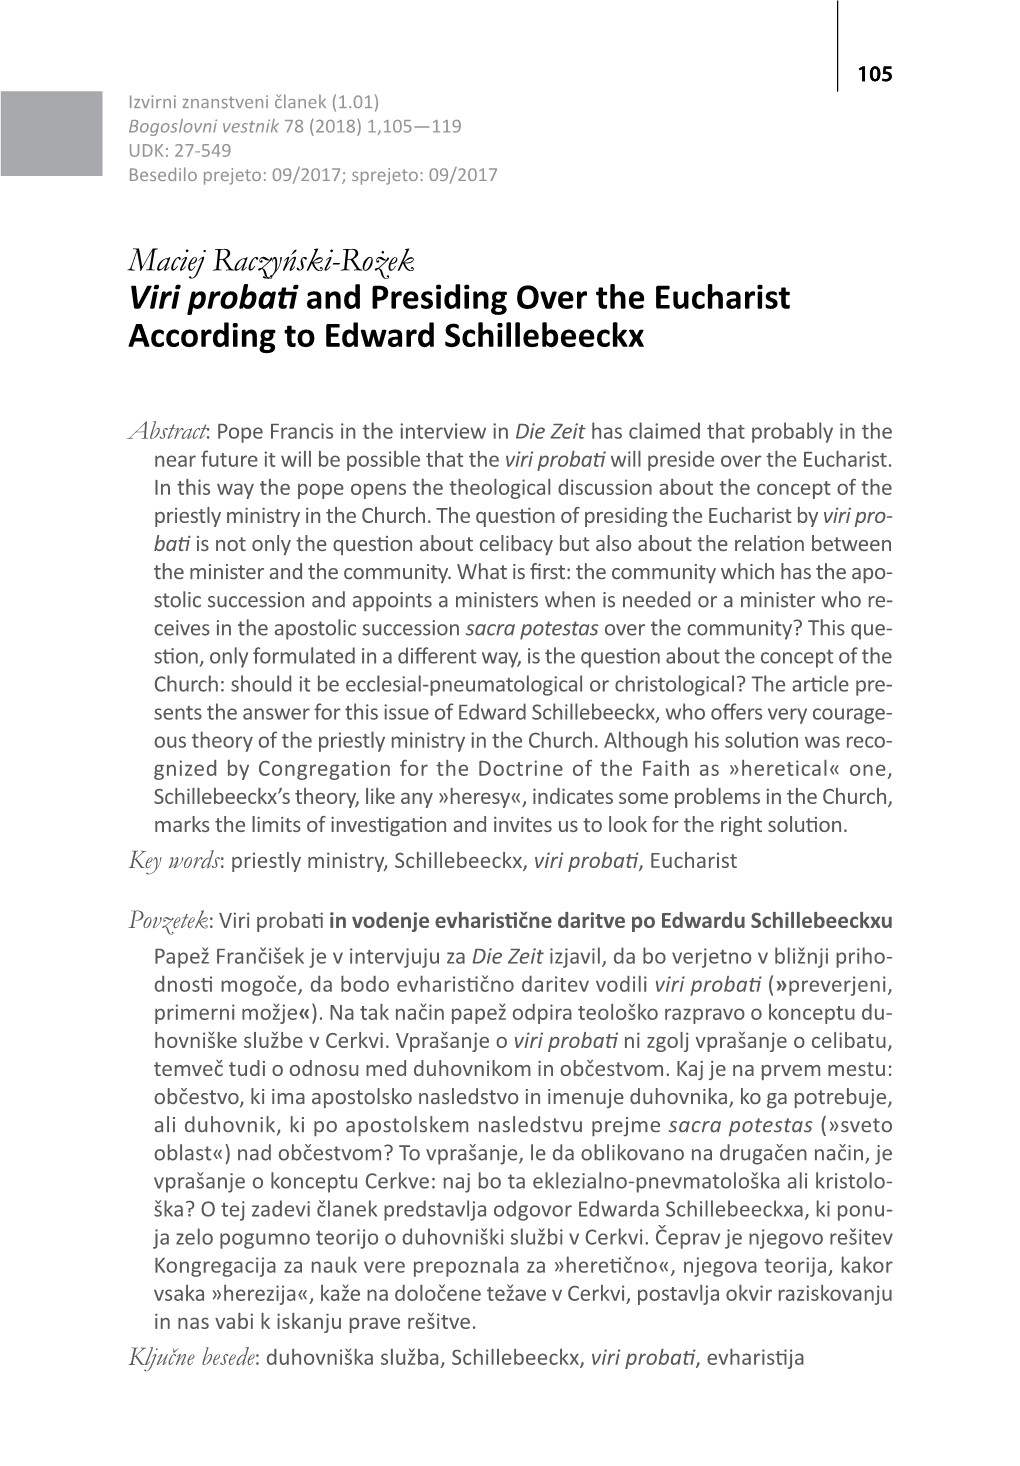 Viri Probati and Presiding Over the Eucharist According to Edward Schillebeeckx